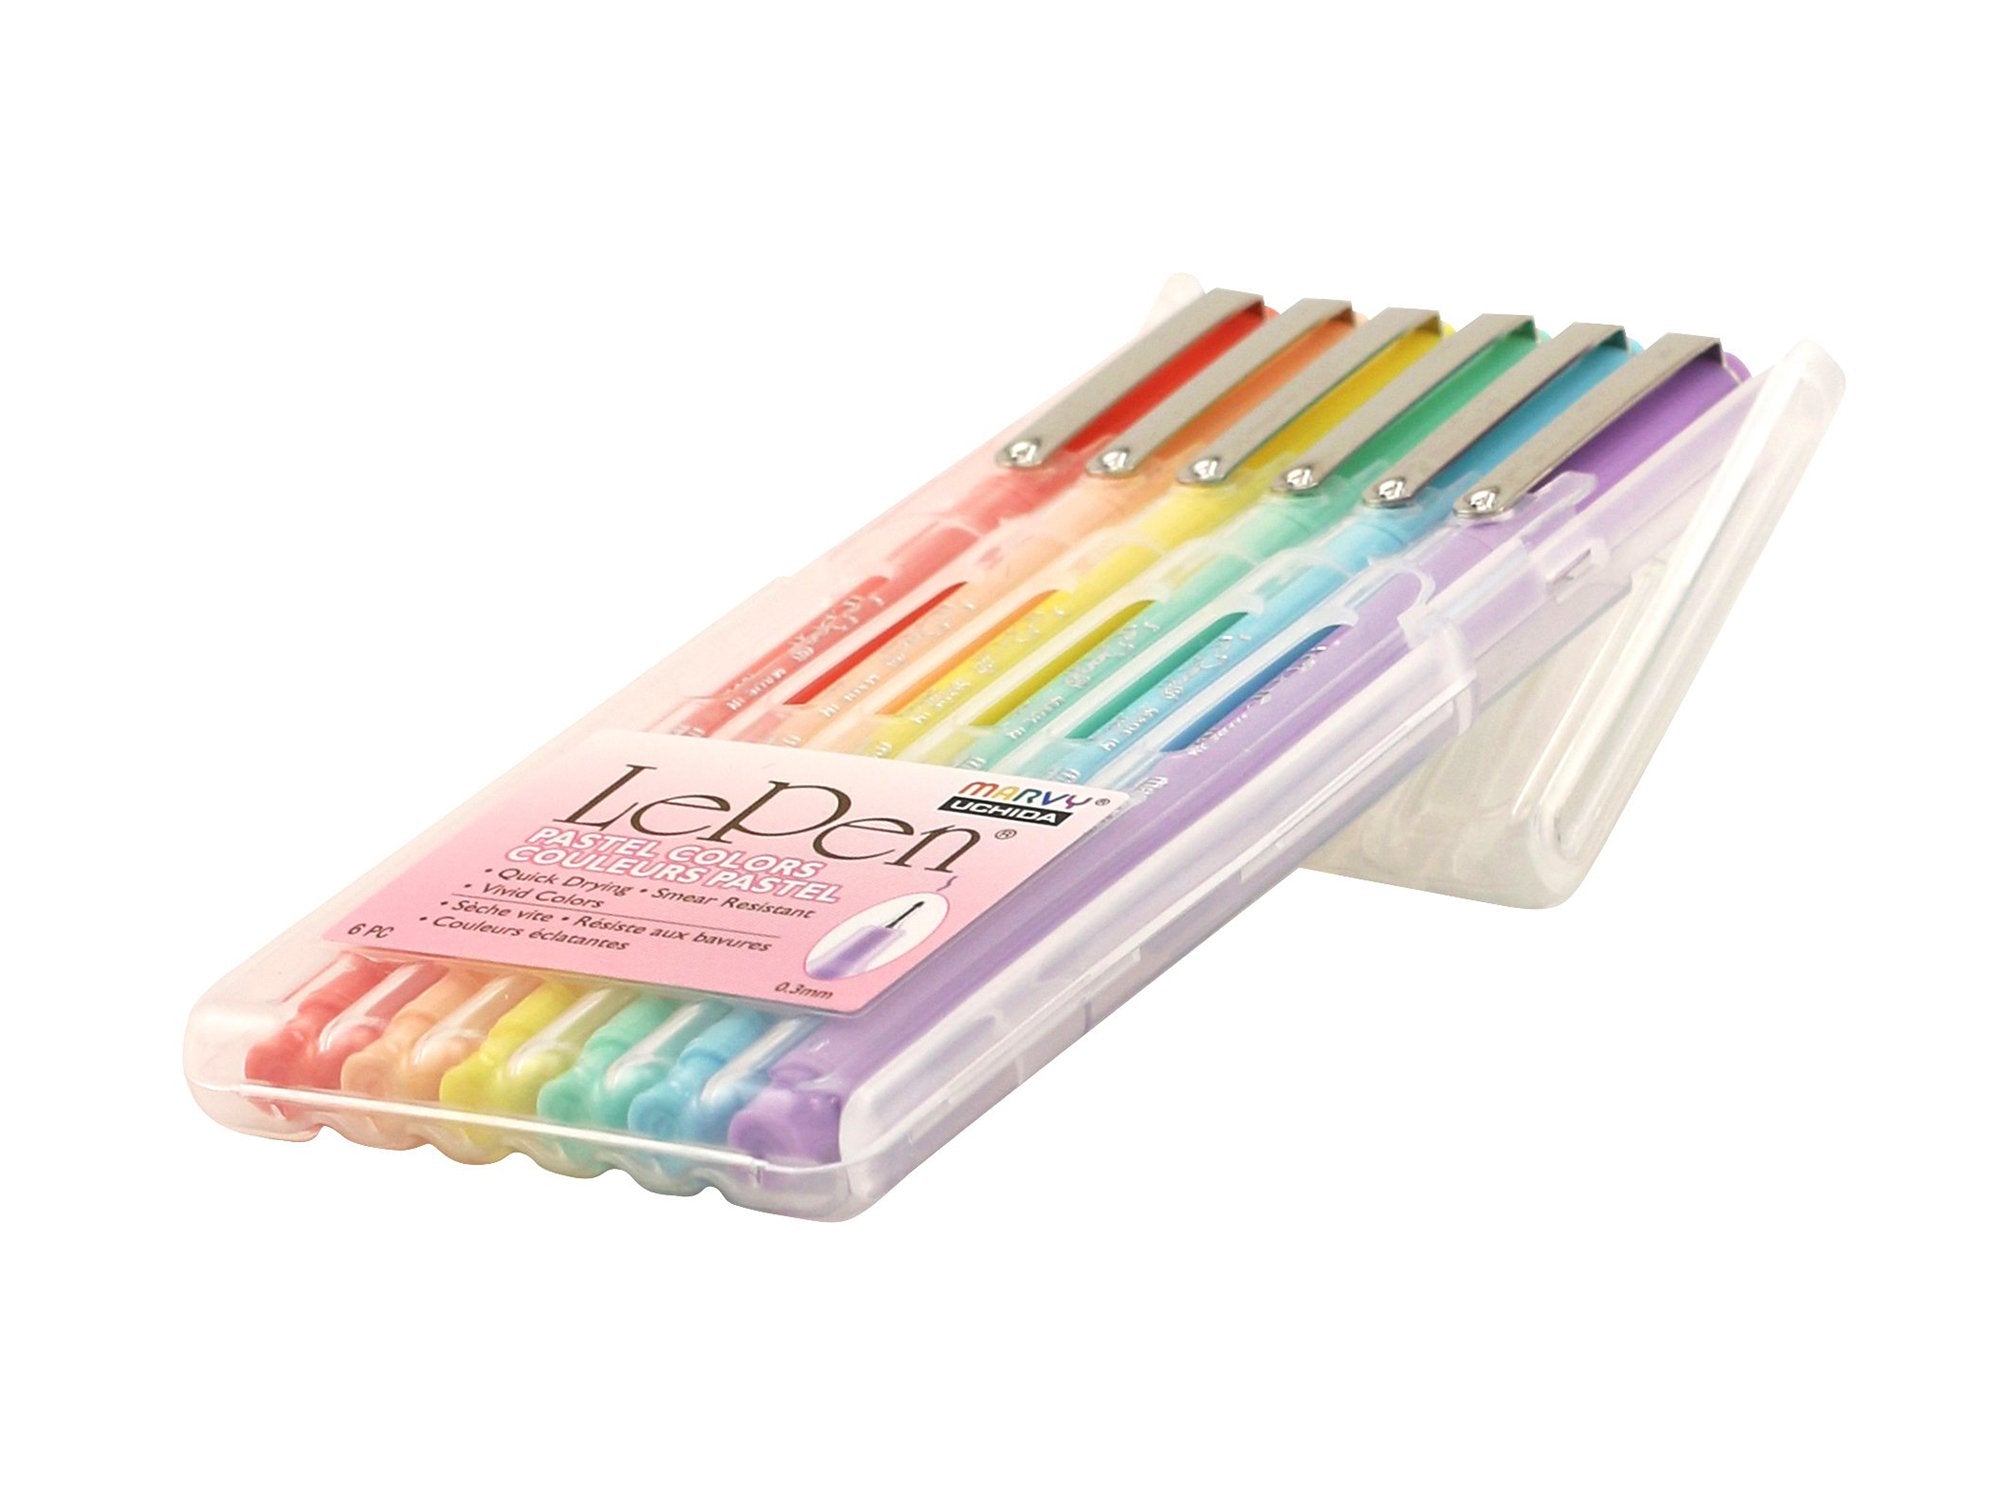 Marvy Uchida Le Pens Multicolor Set, 0.3mm Fine Point Pens